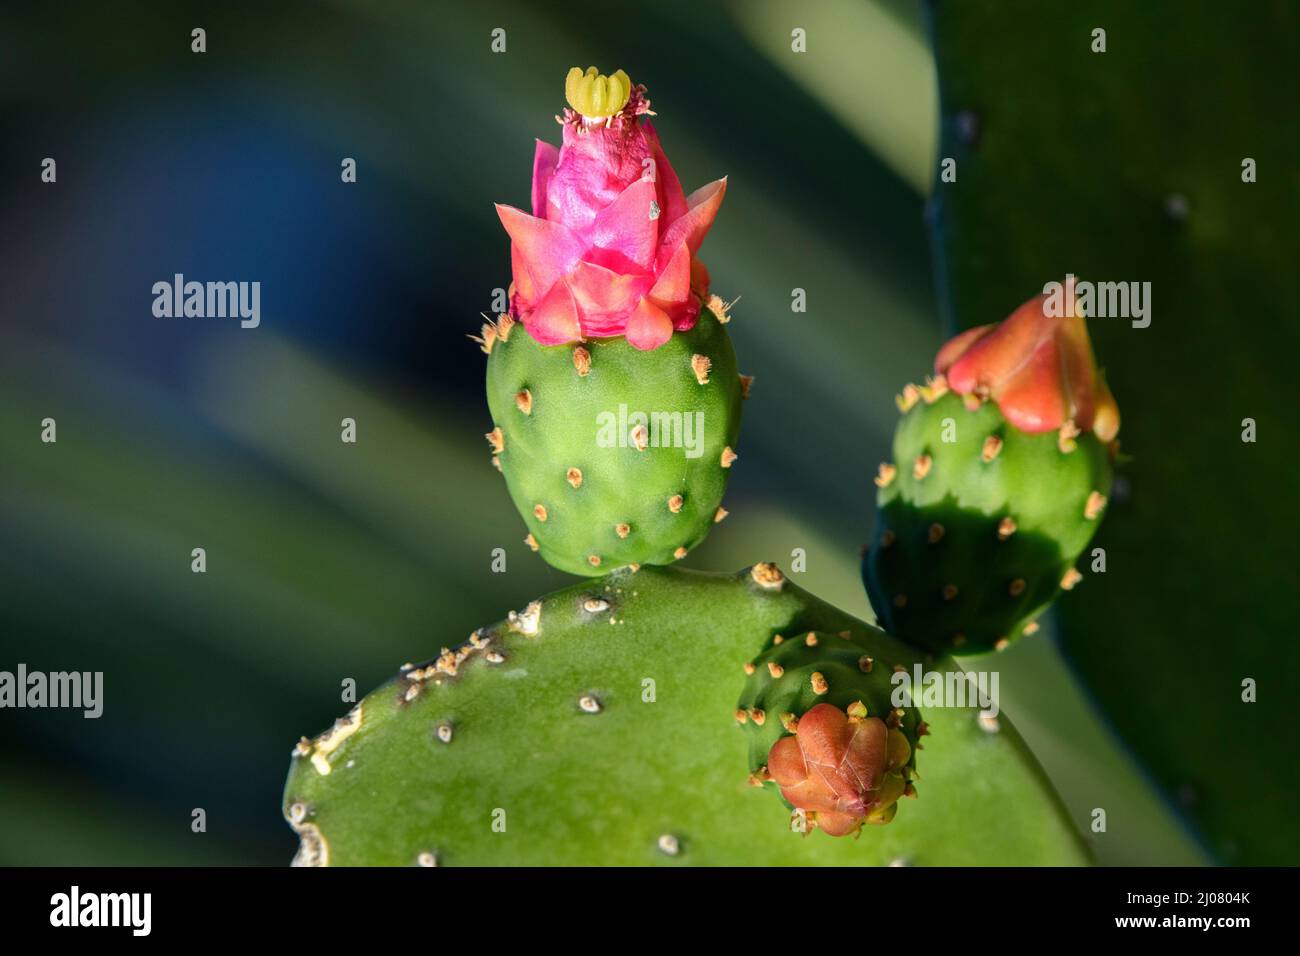 Mexico, Mexican, Baja California, Prickly pear, Opuntia,  Nopal cactus flower , Stock Photo